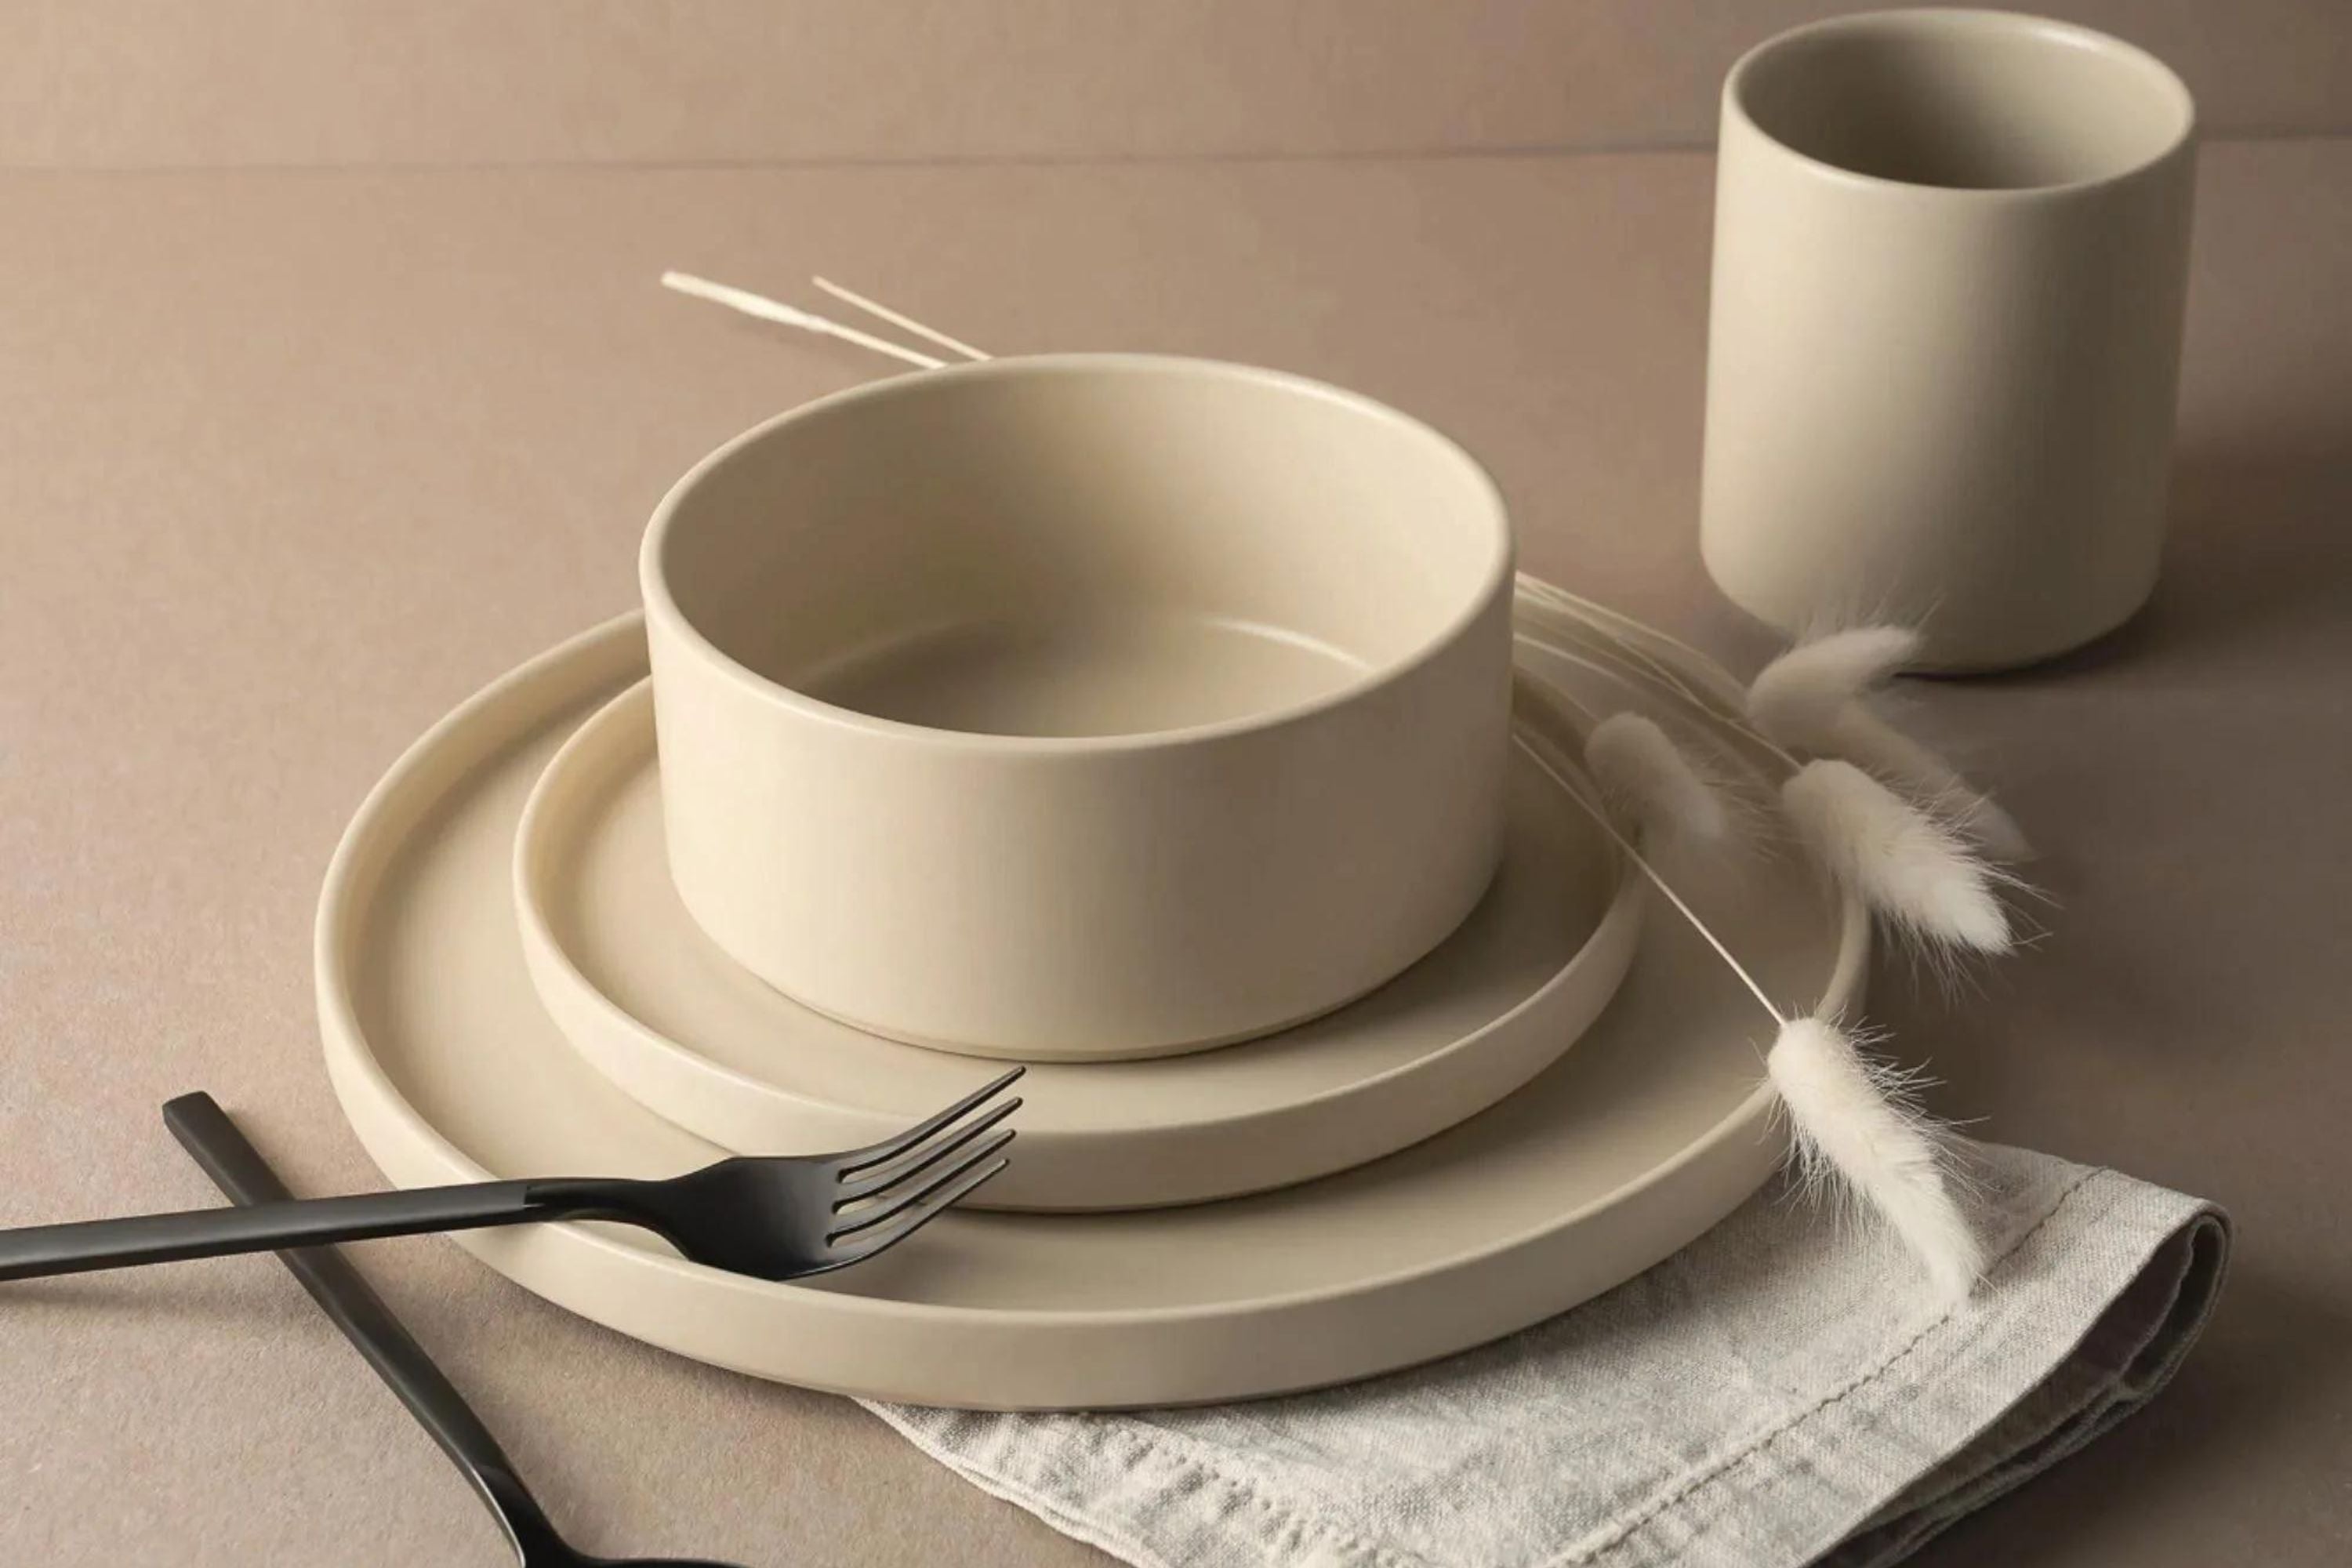 casaWare Jumbo Muffin Pan 6 Cup Ceramic Coated Non-Stick (Silver